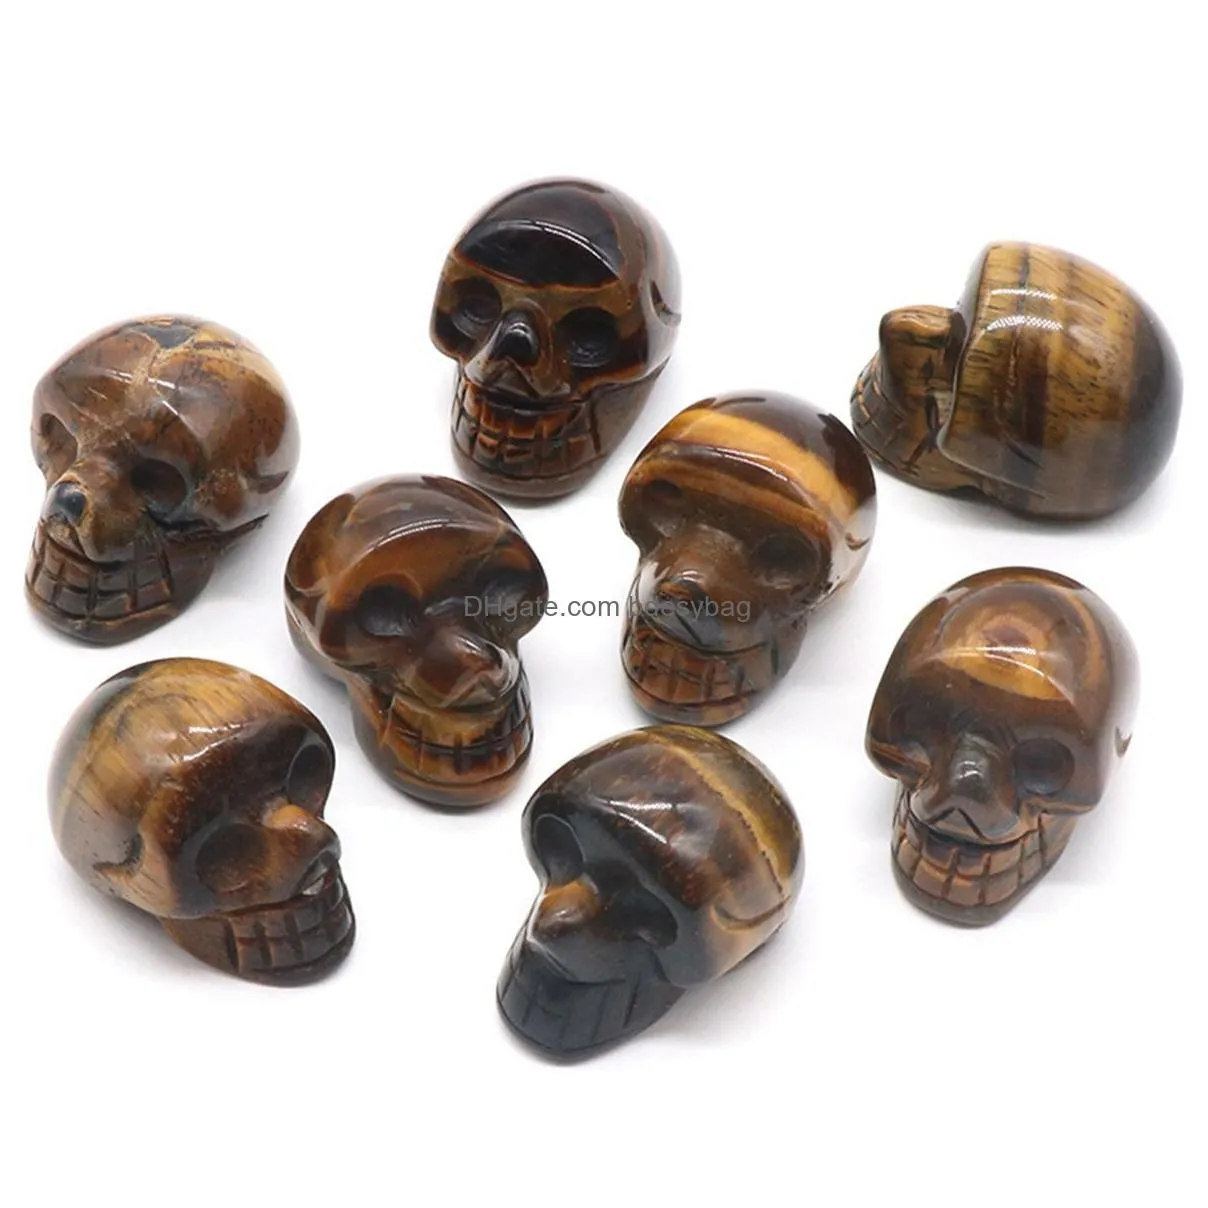 23mm natural crystal ornaments figurine gemstone howlite skulls healing stone for feng shui home decoration